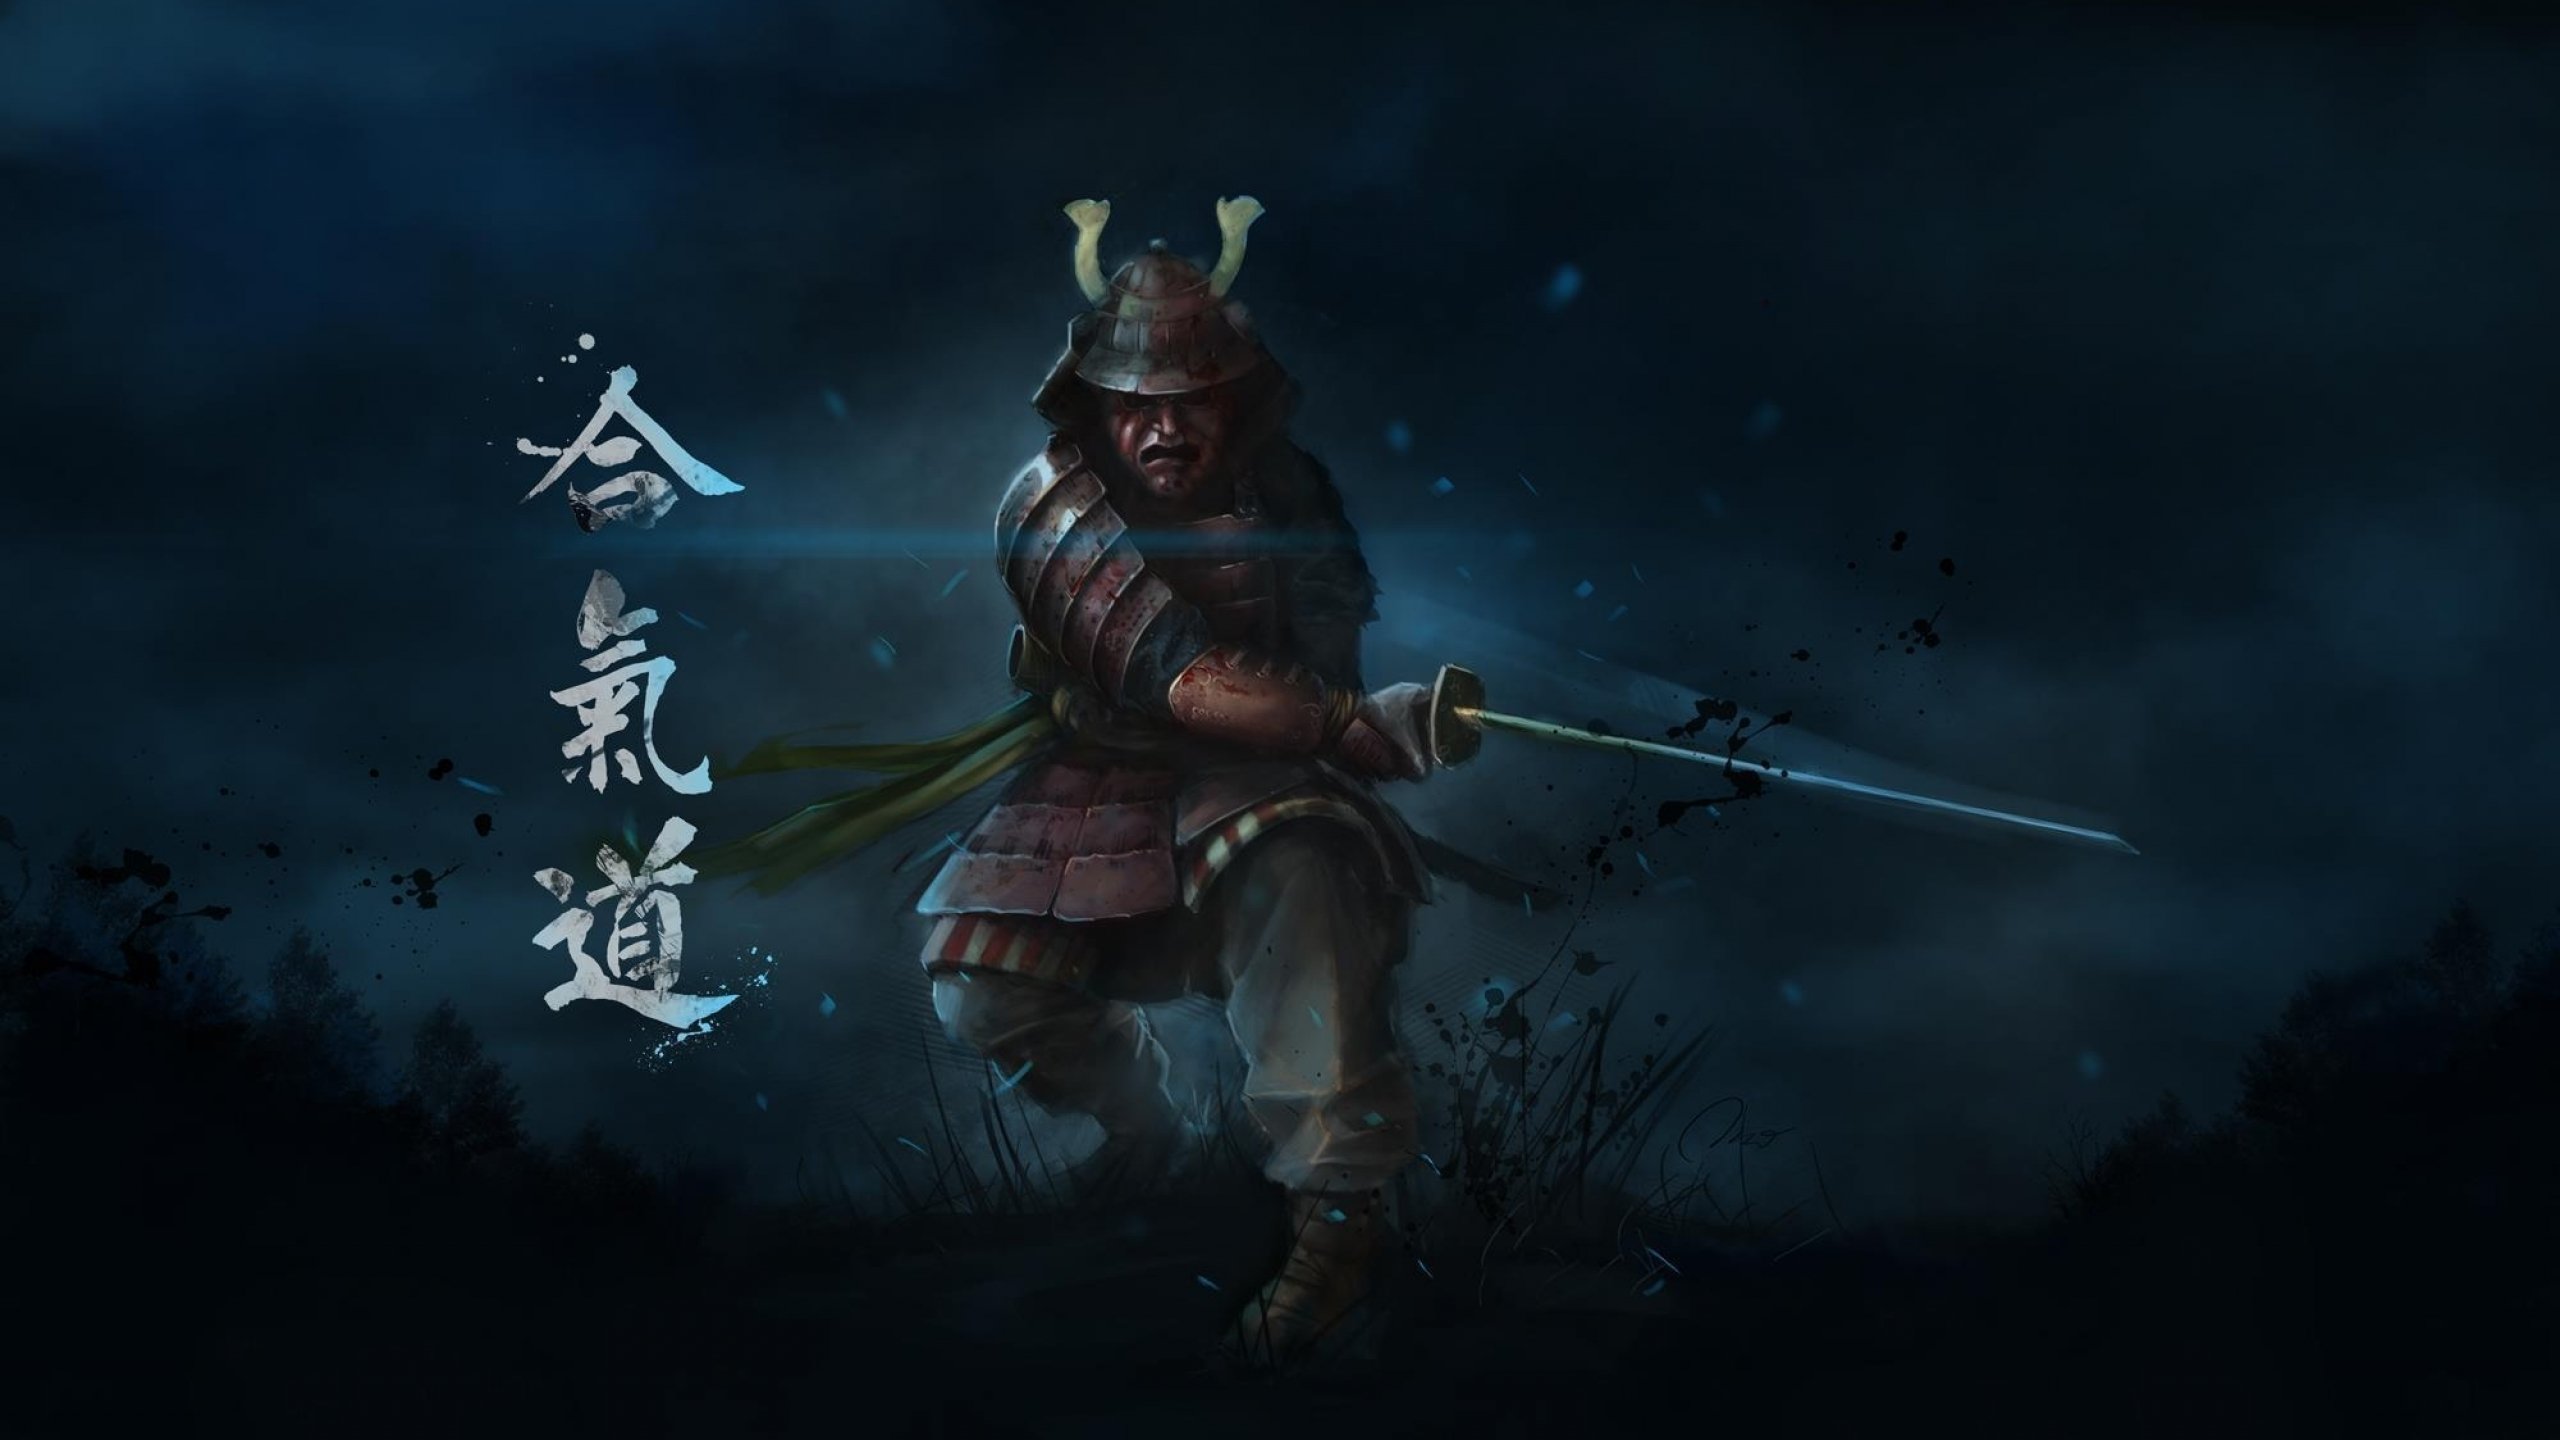 Samurai warrior fantasy art artwork asian wallpaper | 2560x1440 ...